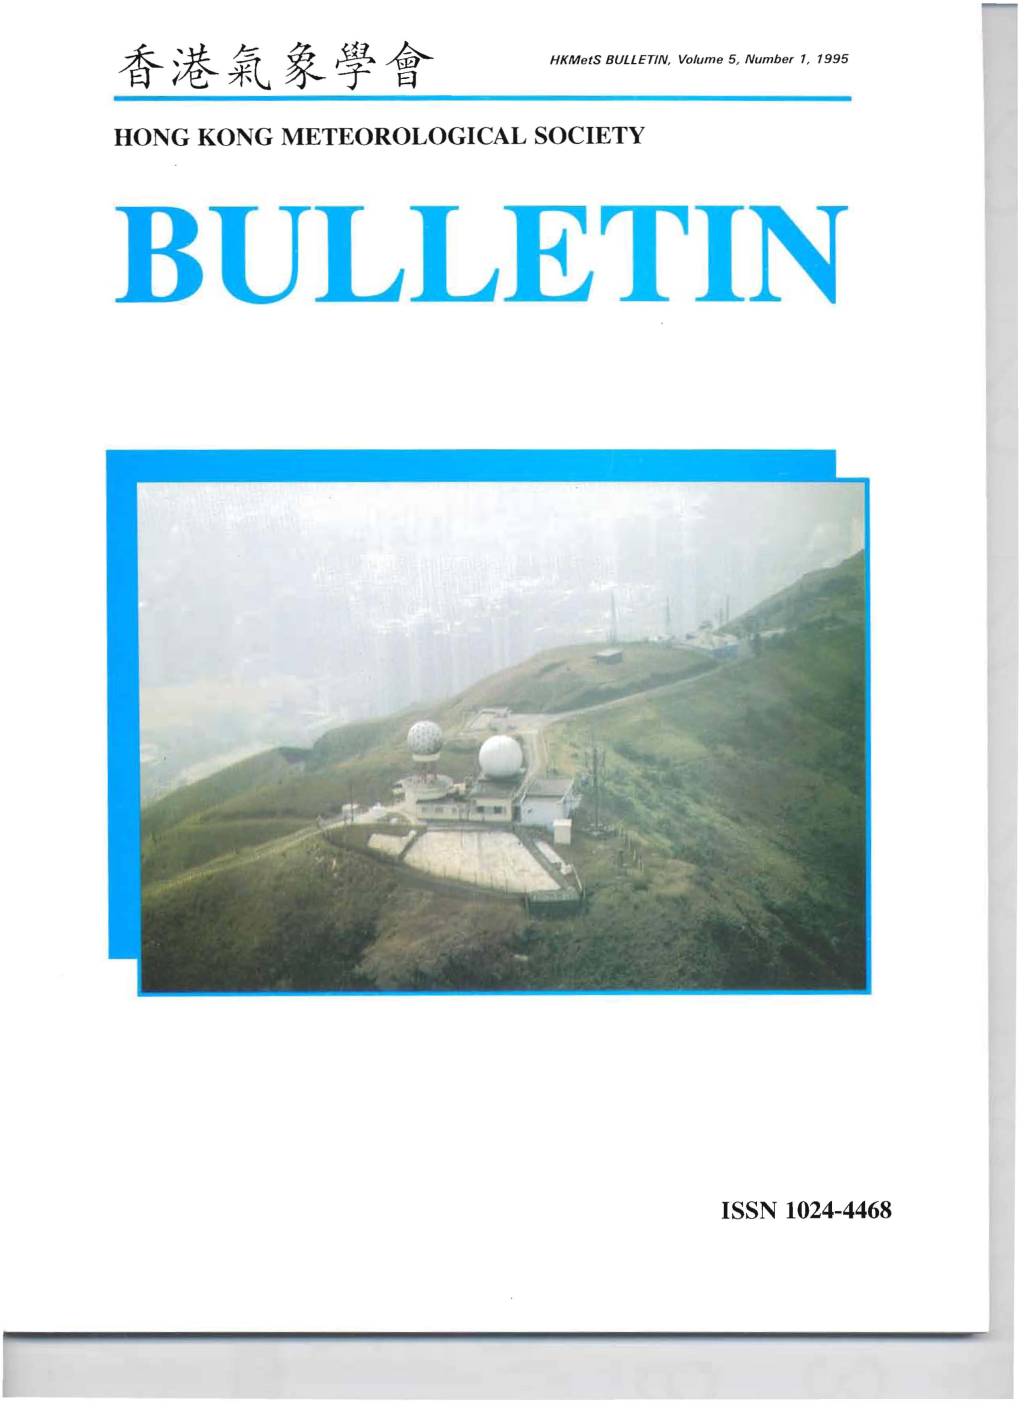 Hkmets BULLETIN, Volume 5, Number 1, 1995